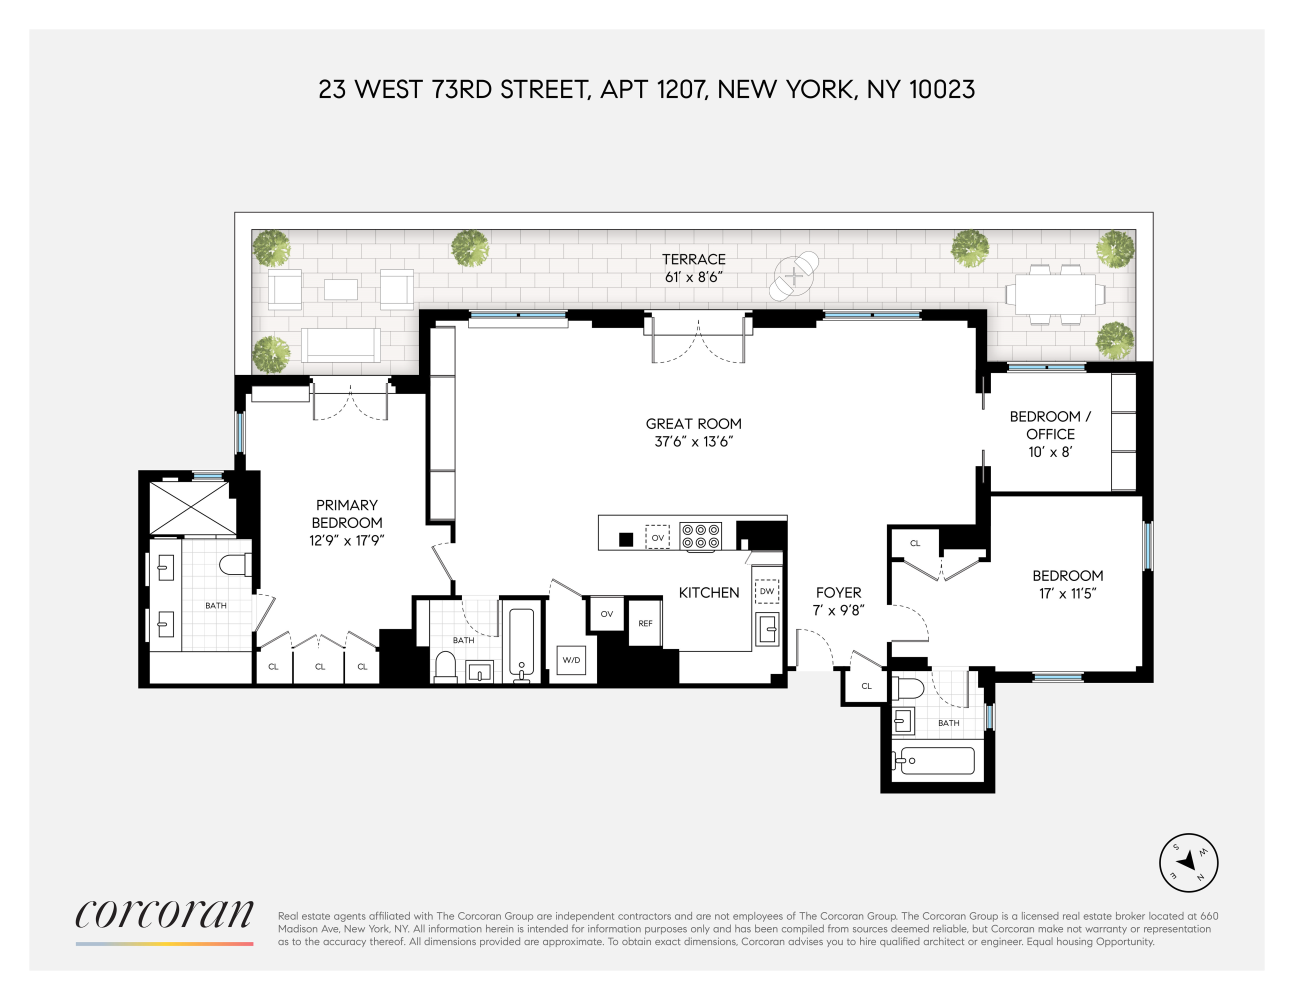 Floorplan for 23 West 73rd Street, 1207